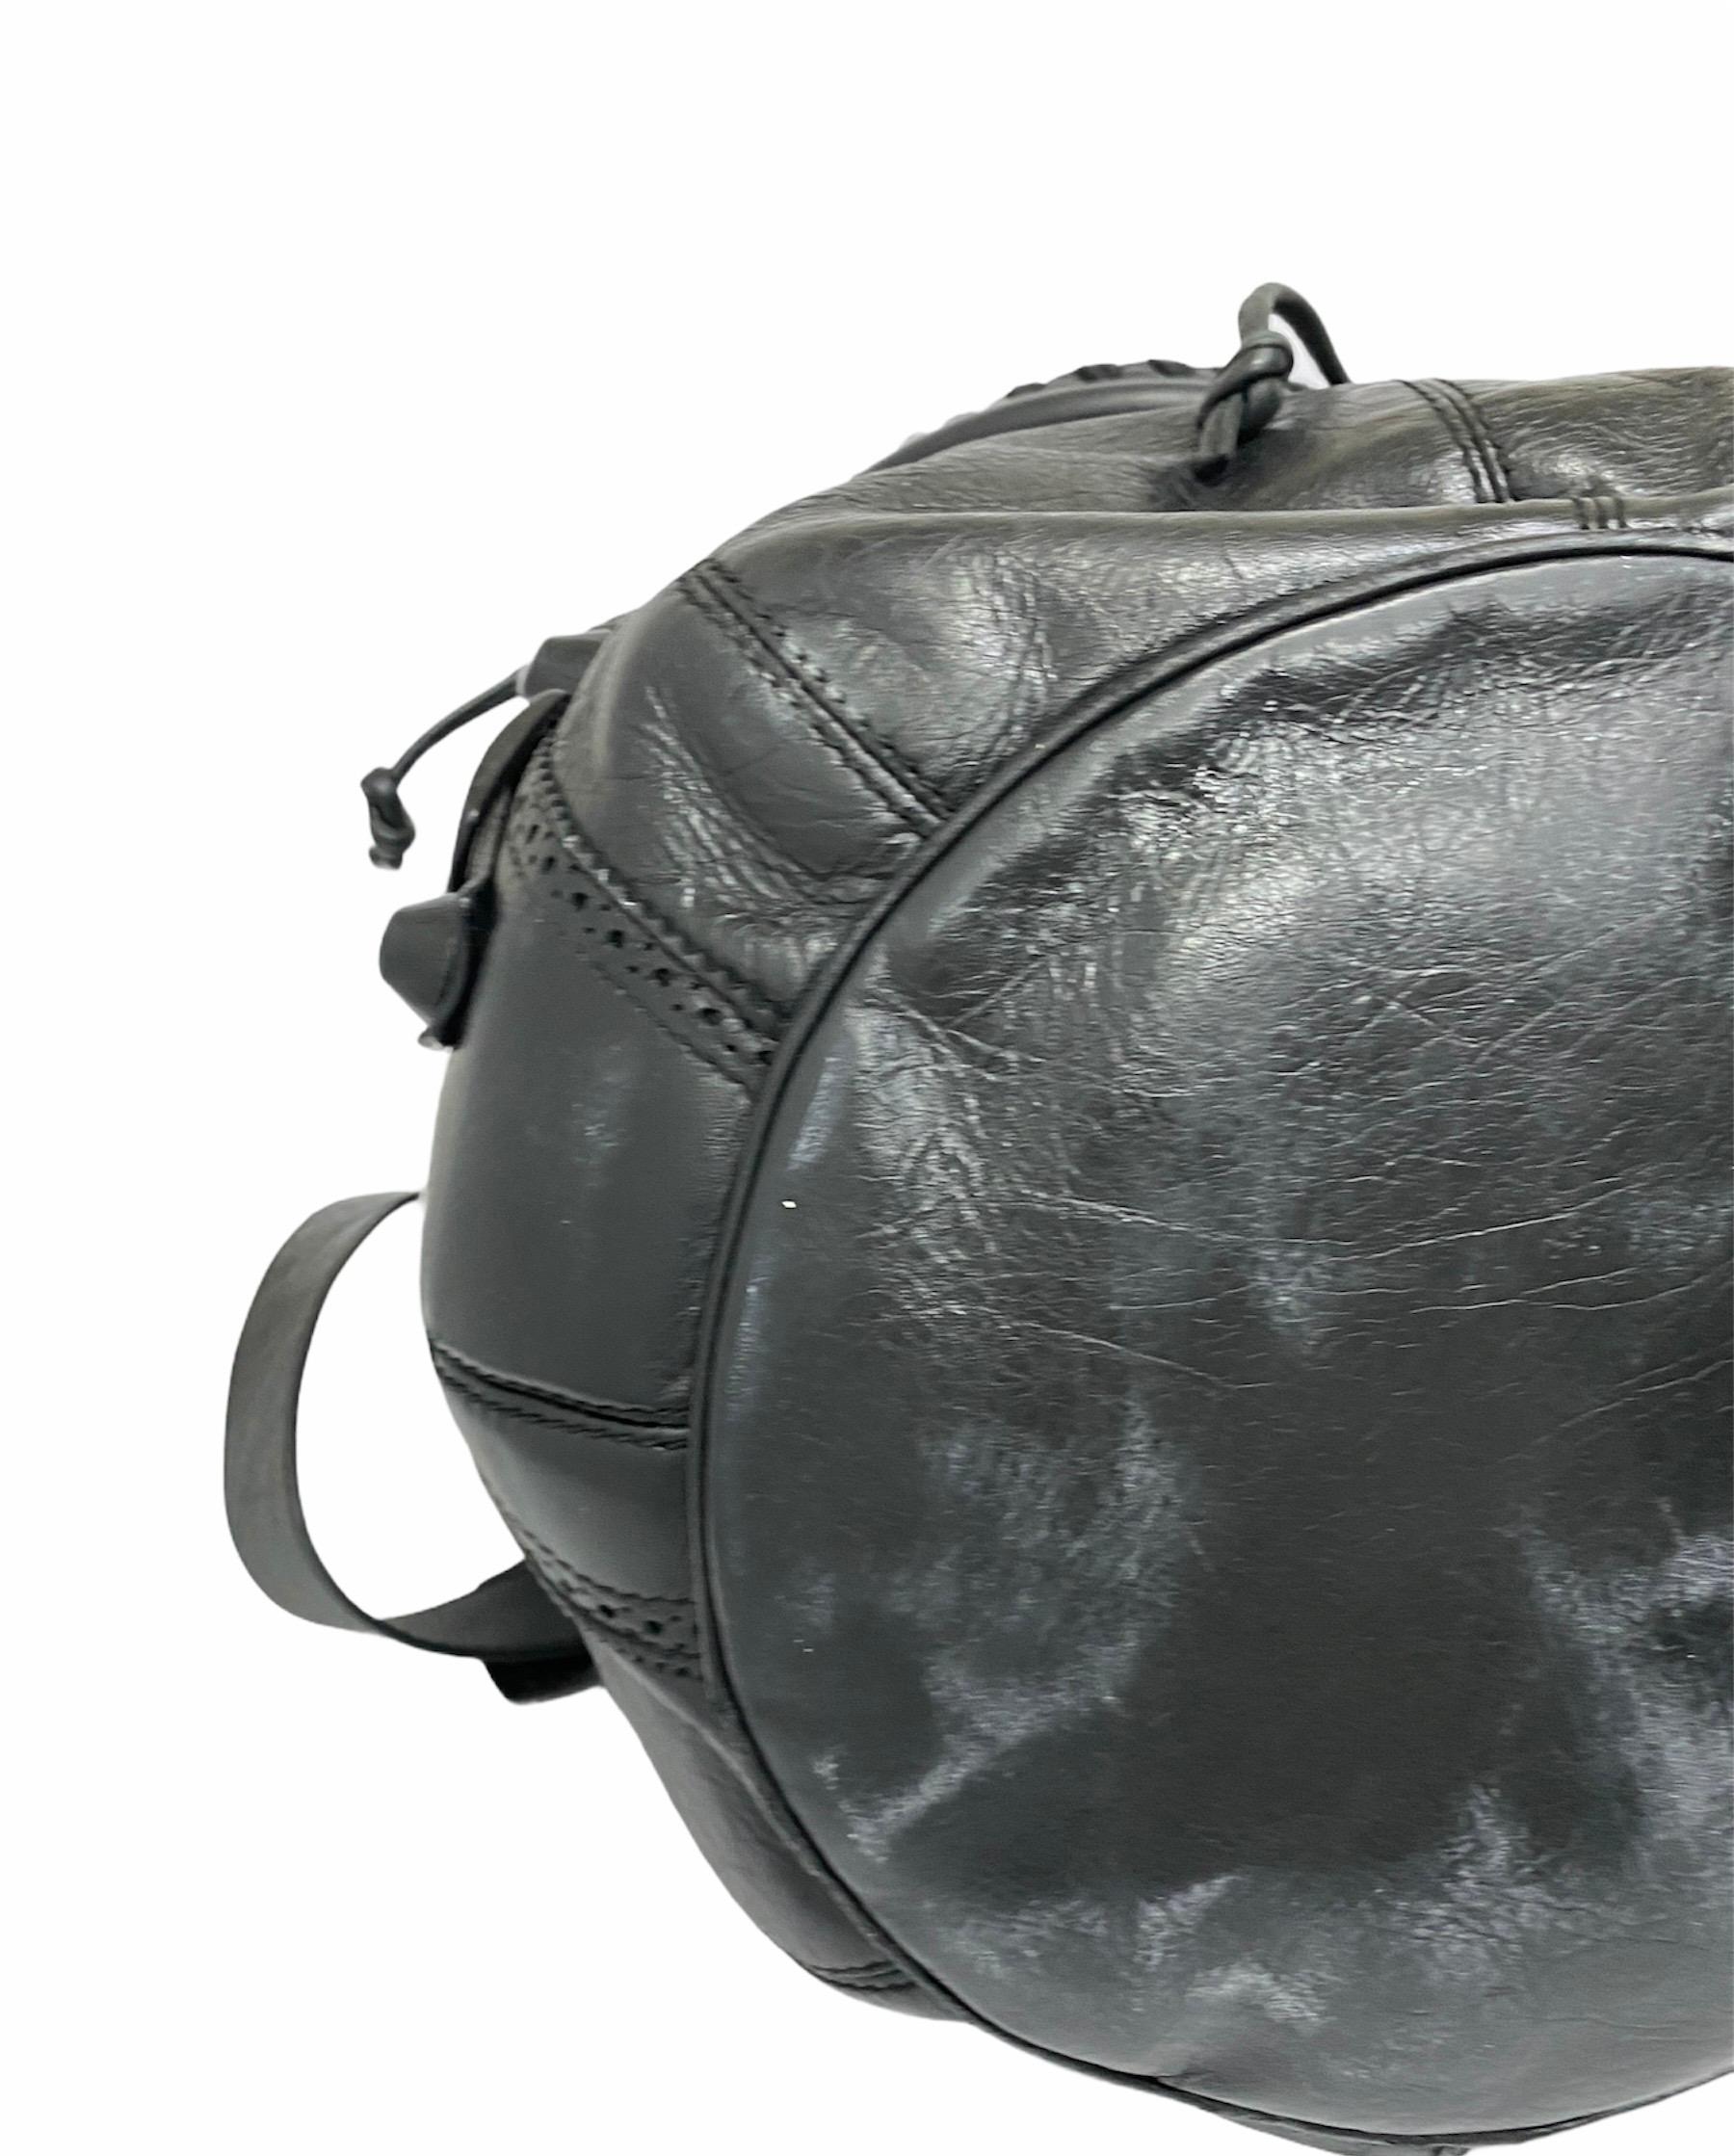 Balenciaga Black Leather Bucket Bag with Silver Hardware 1